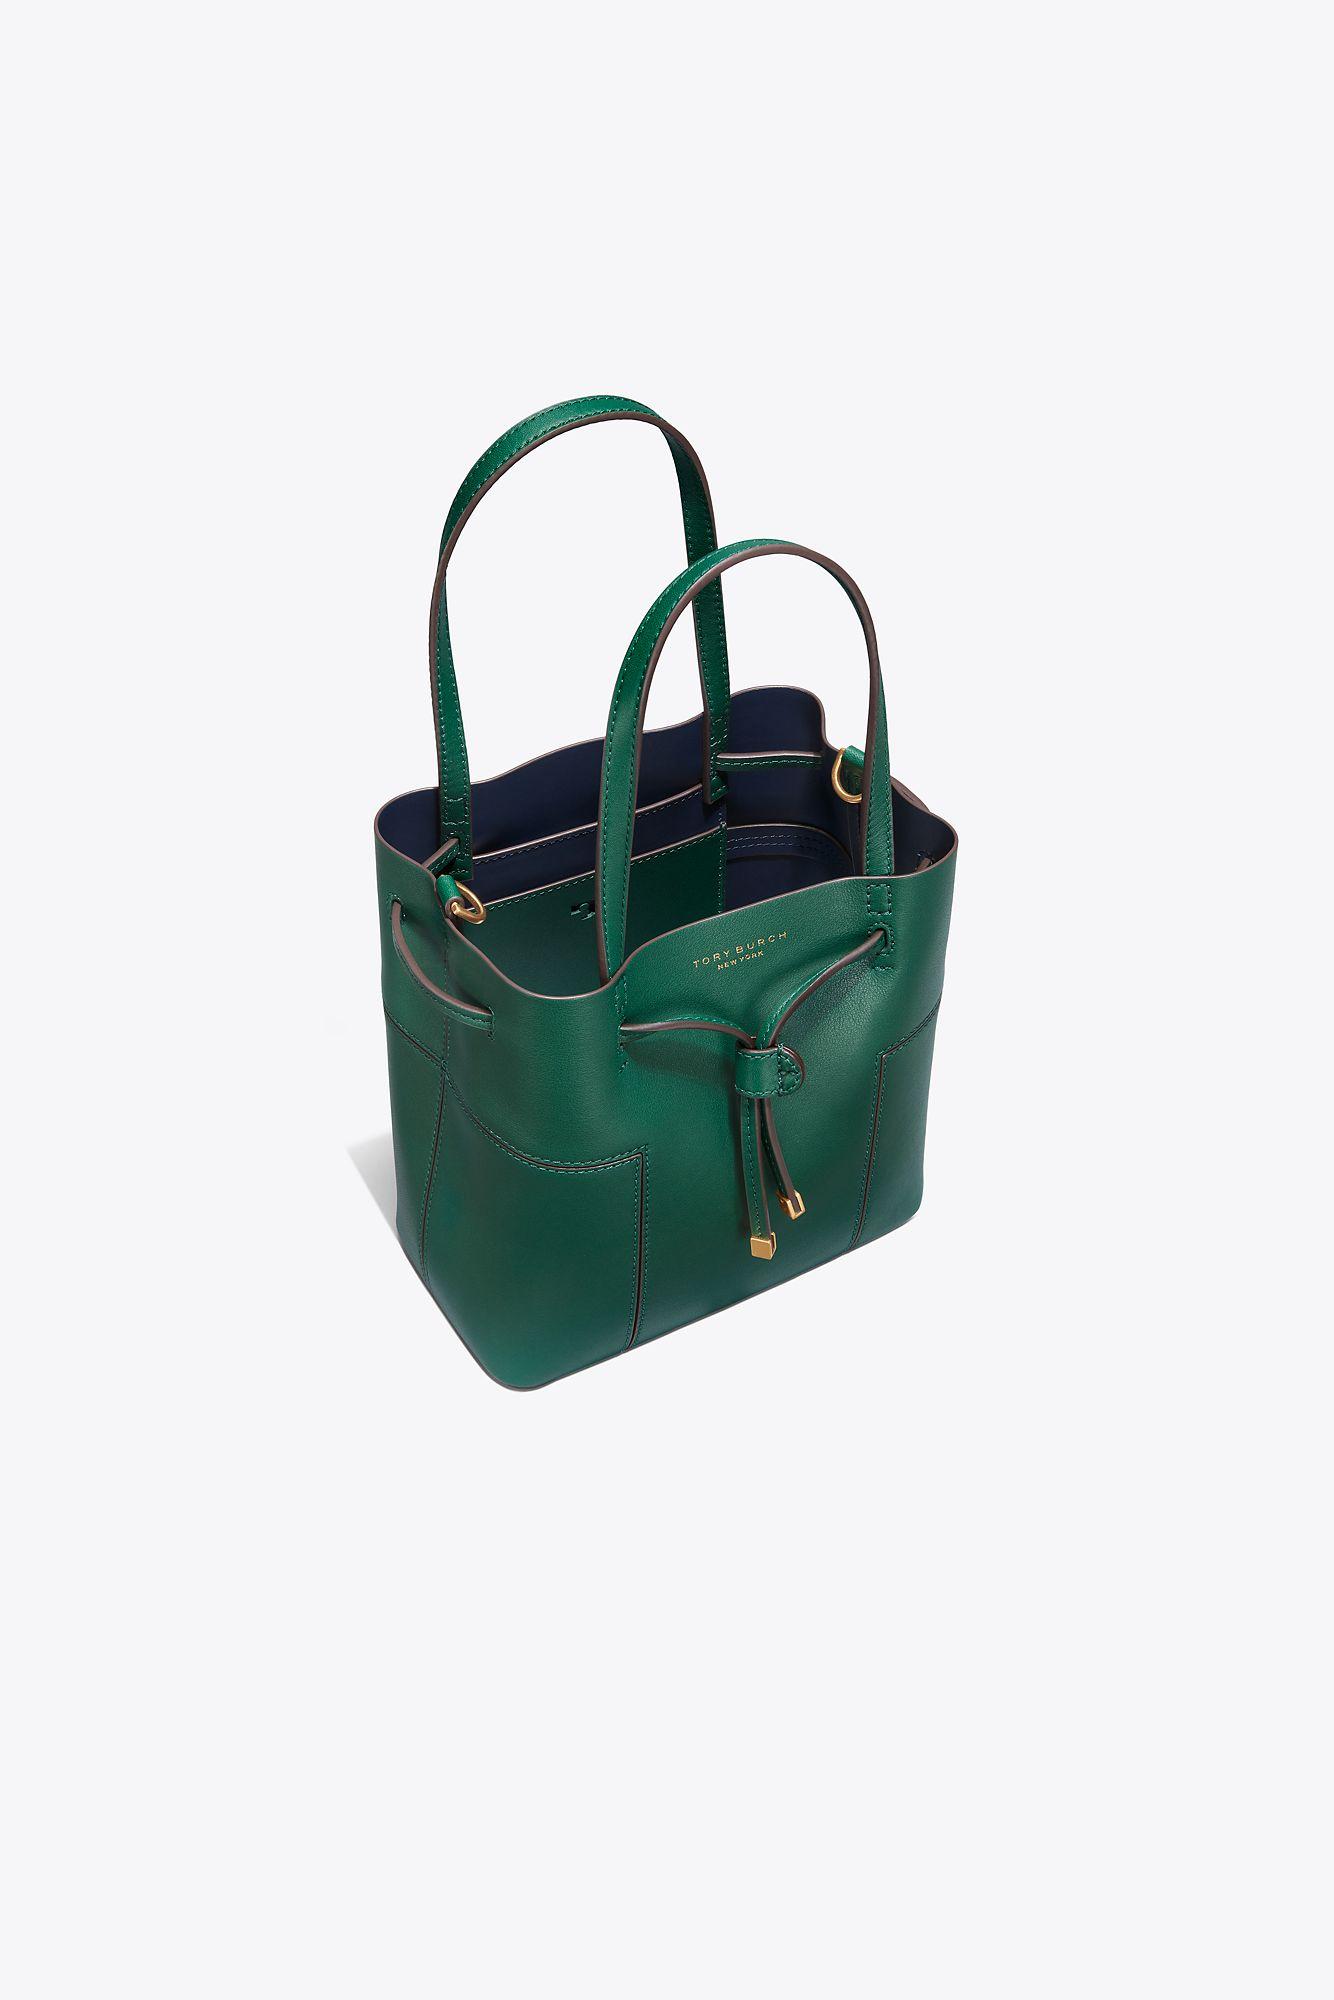 Tory Burch Block-t Small Bucket Bag in Green | Lyst